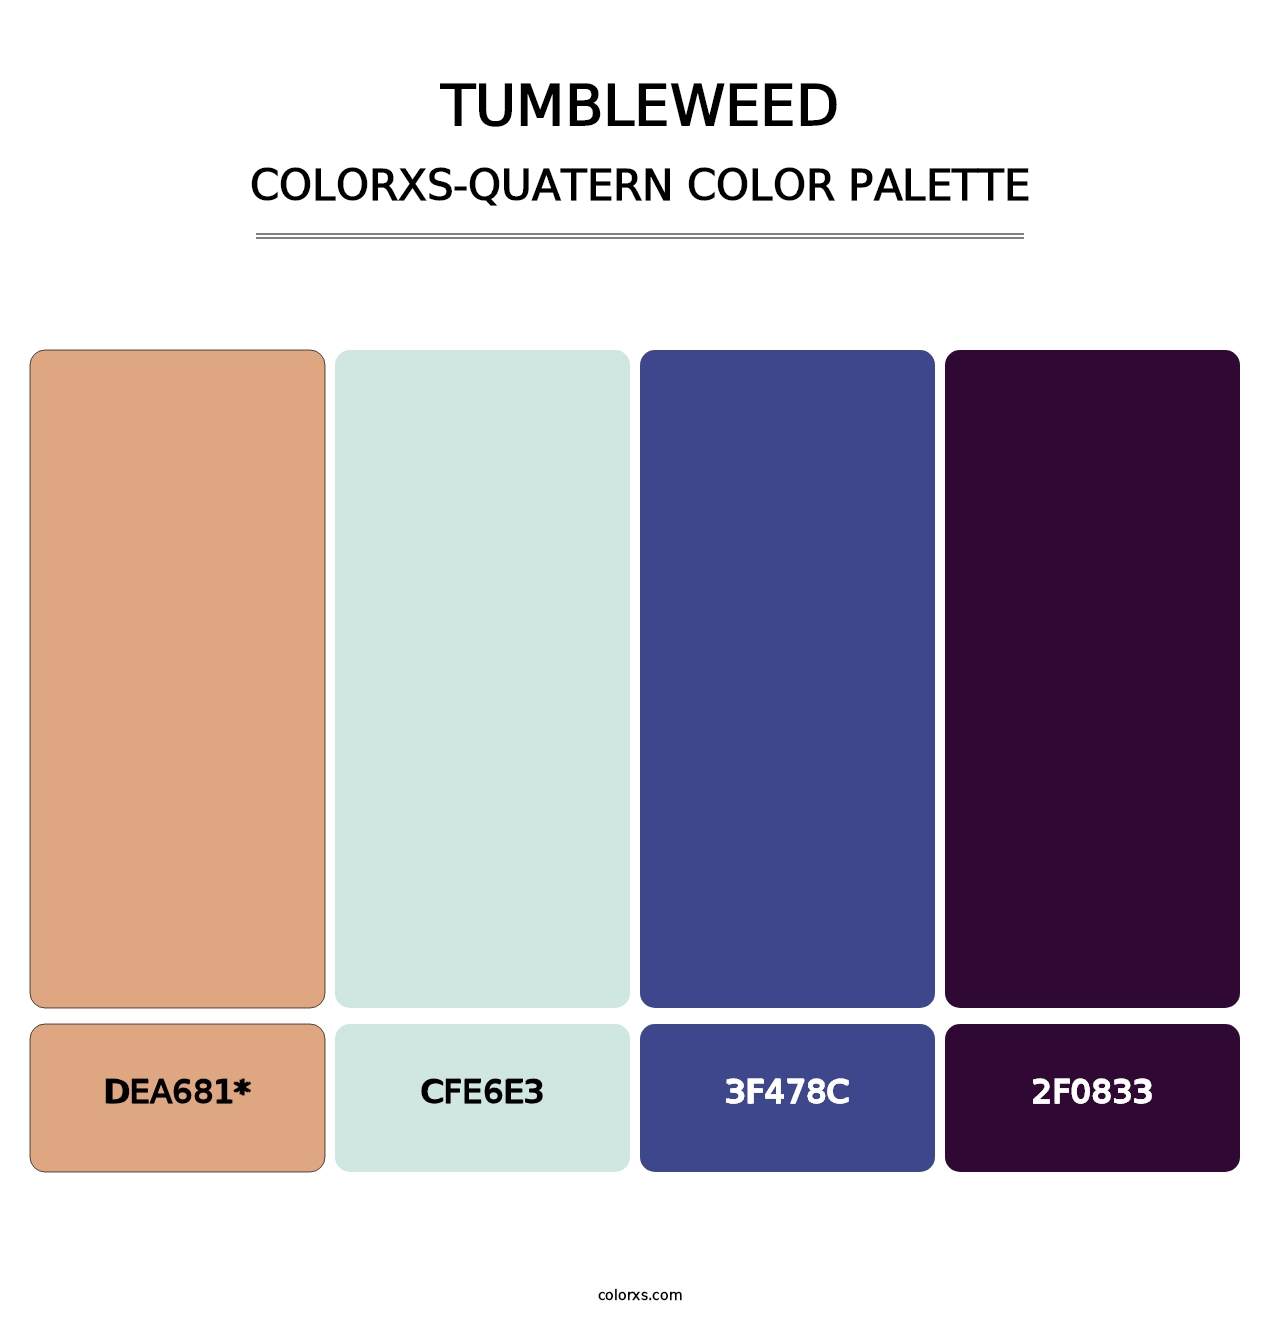 Tumbleweed - Colorxs Quatern Palette